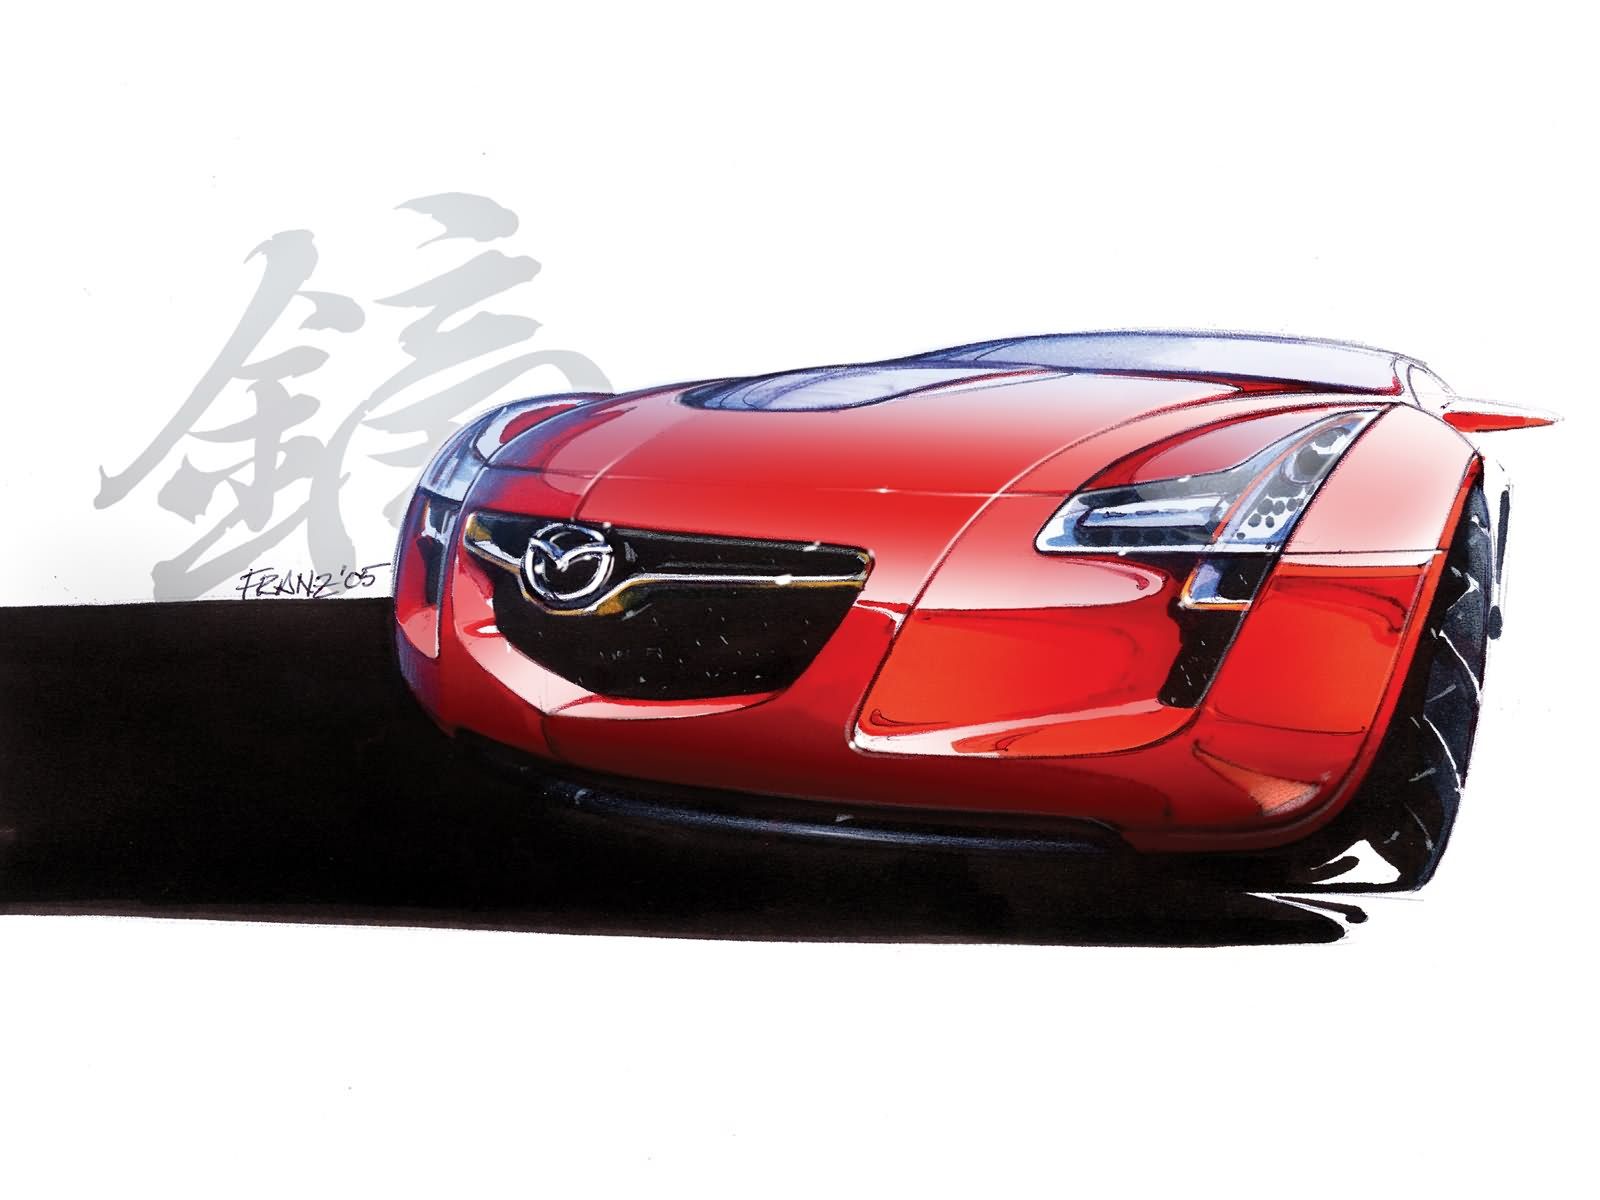 Official Mazda design sketch